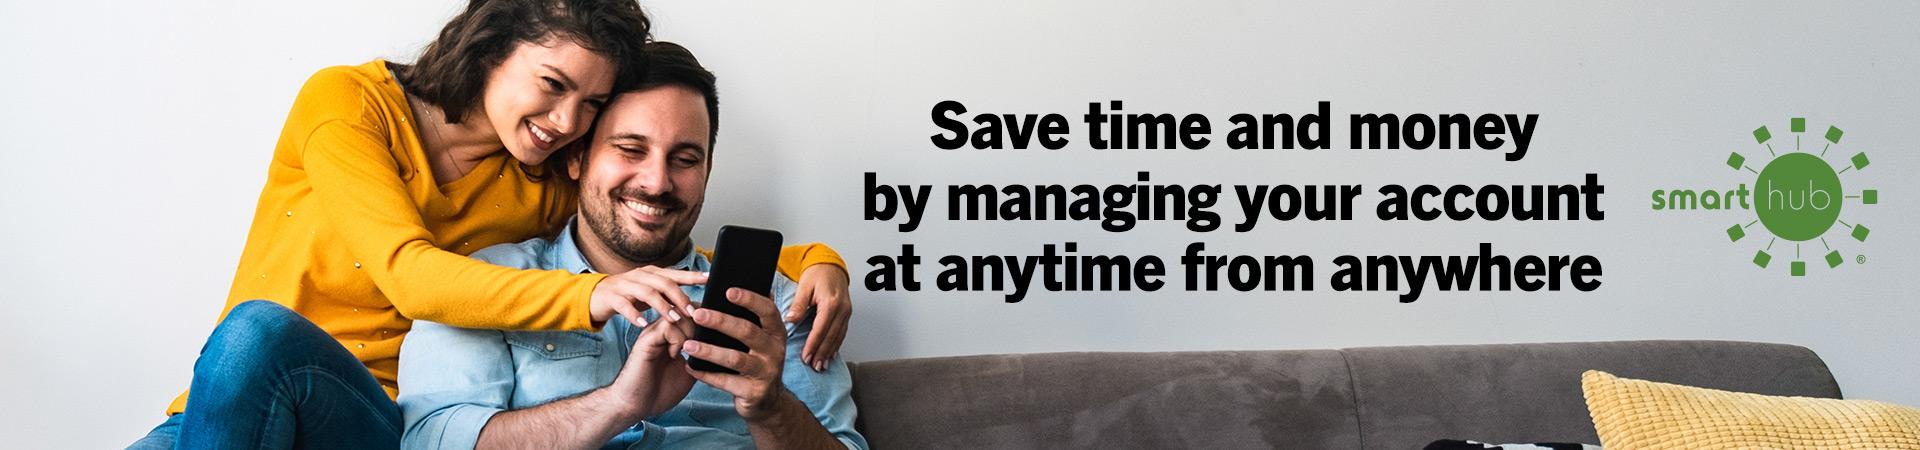 Save time and money with SmartHub